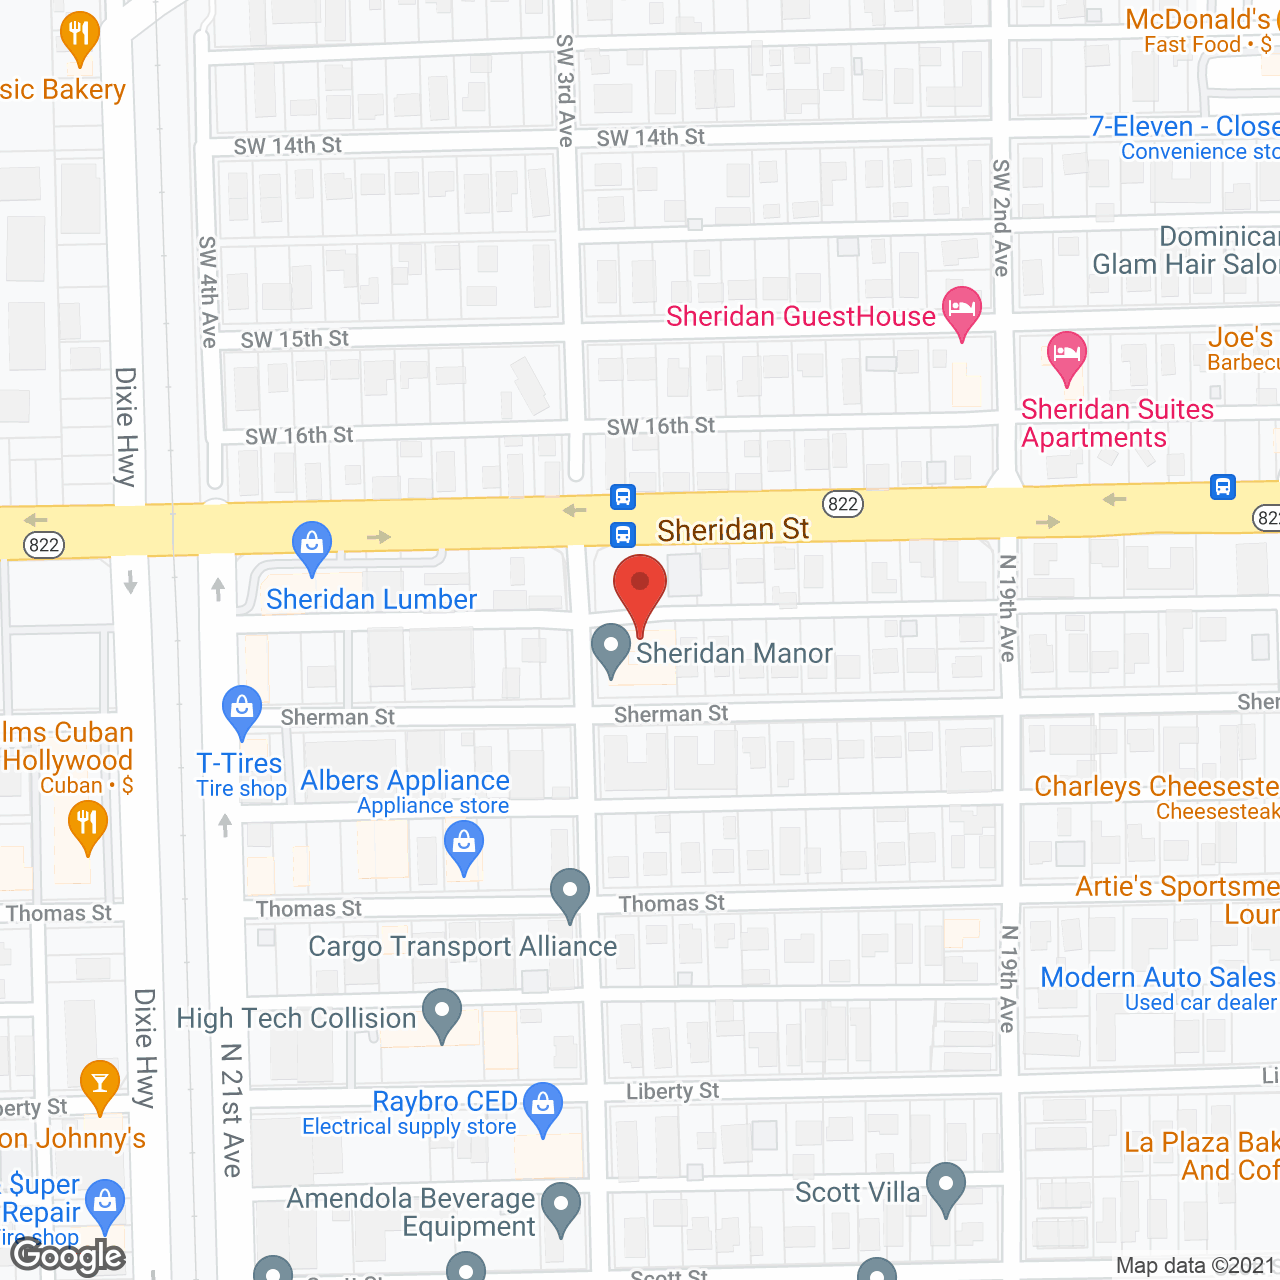 Sheridan Manor in google map